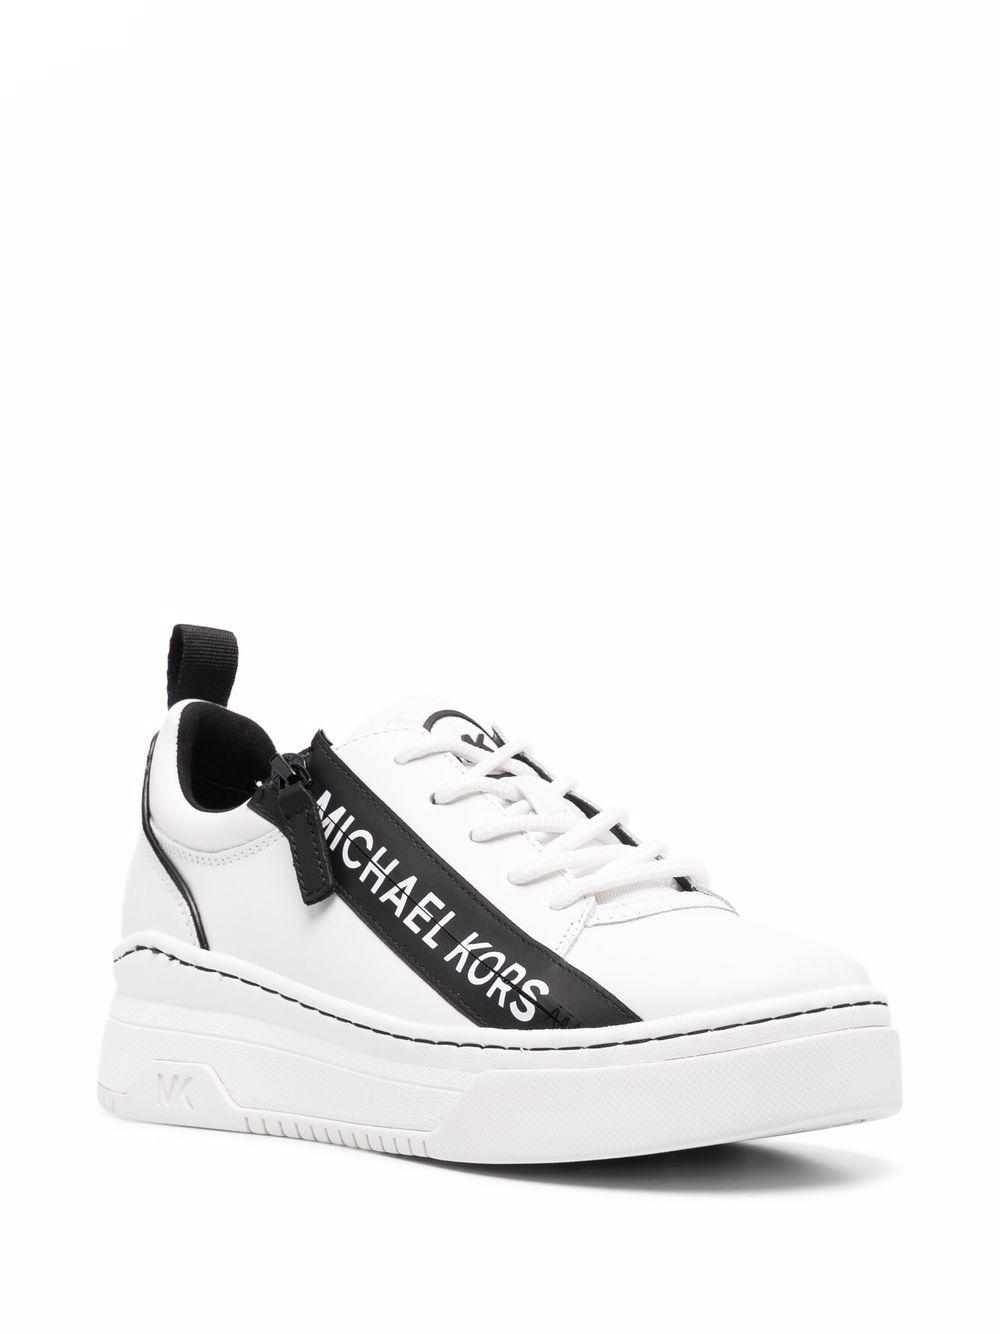 Sneakers Michael Kors optic white Alex